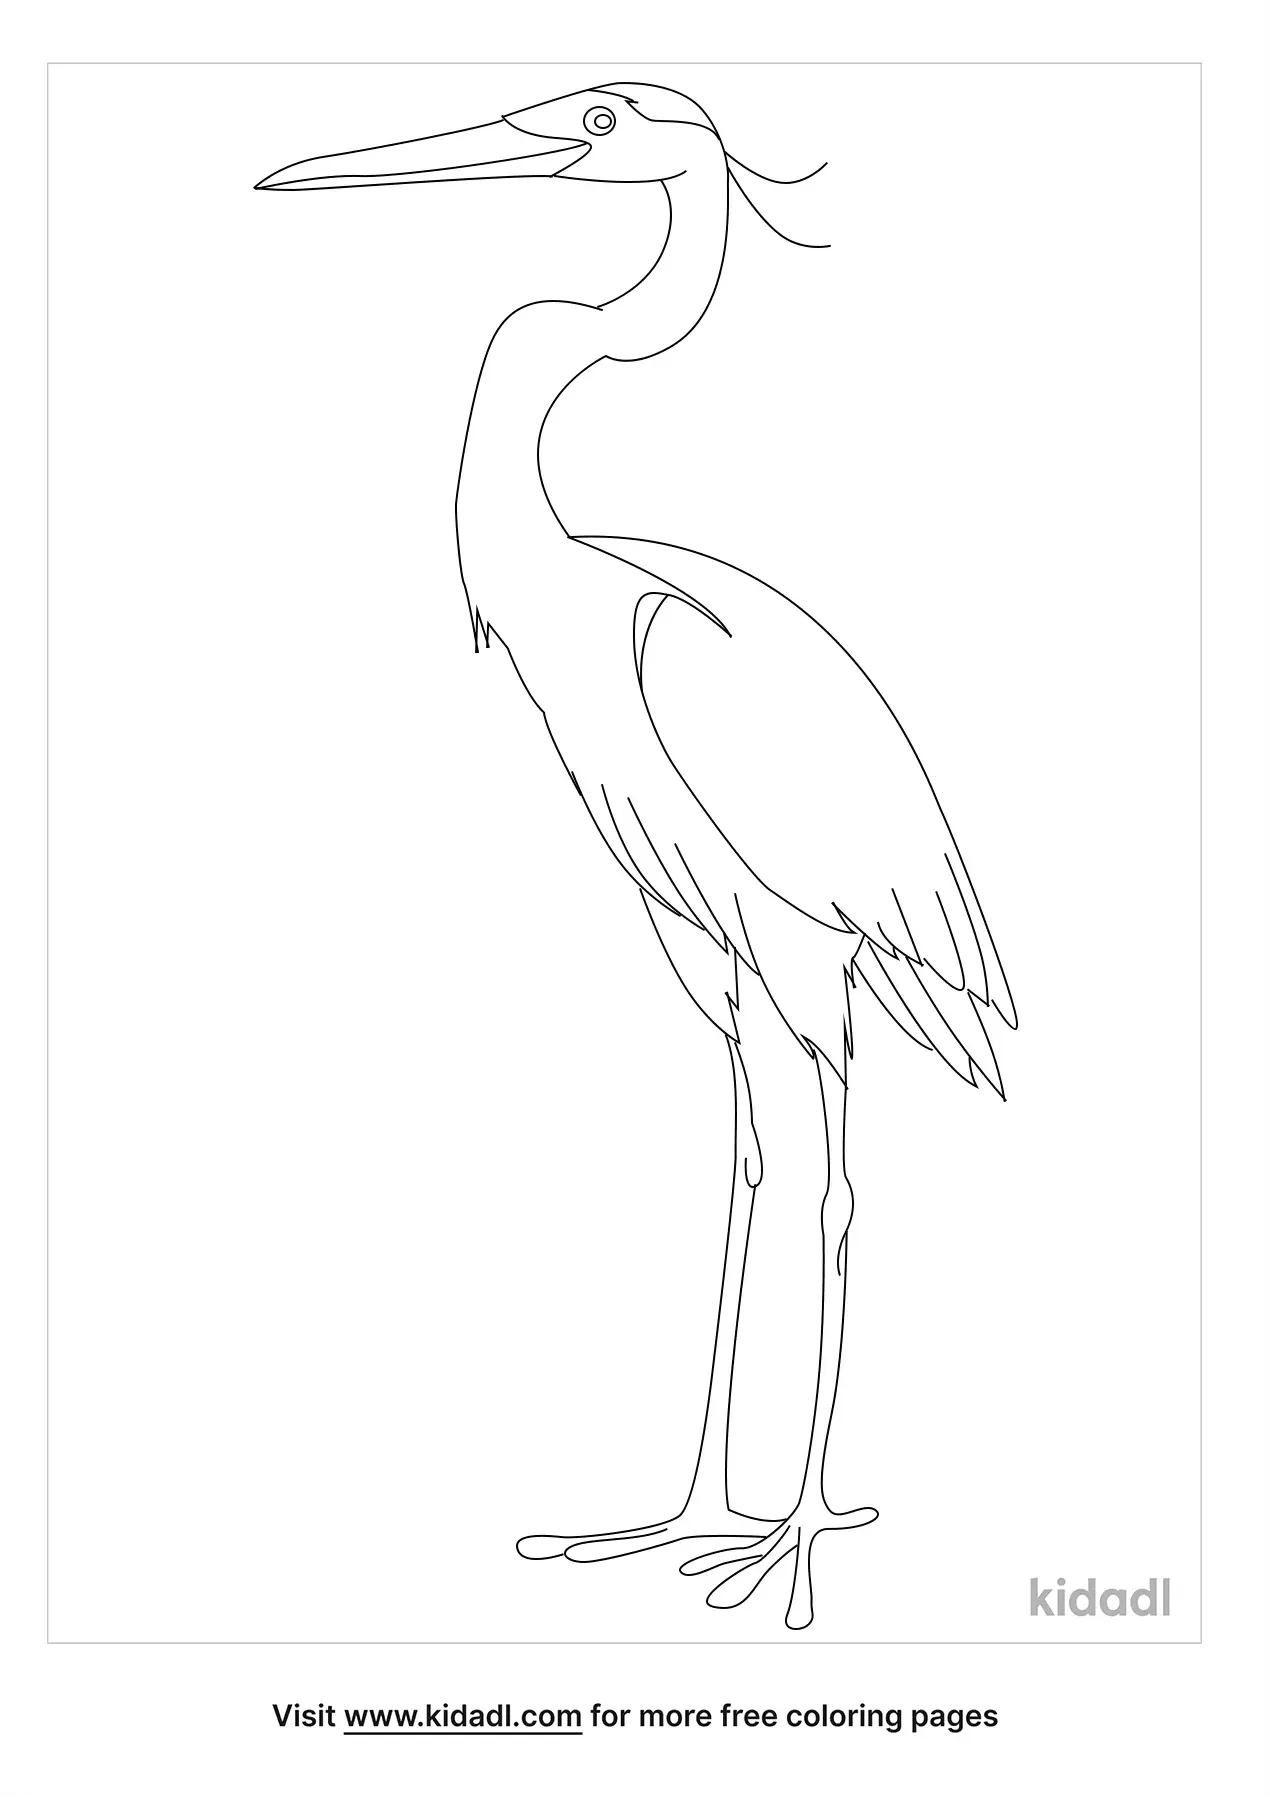 Free Heron Coloring Page | Coloring Page Printables | Kidadl